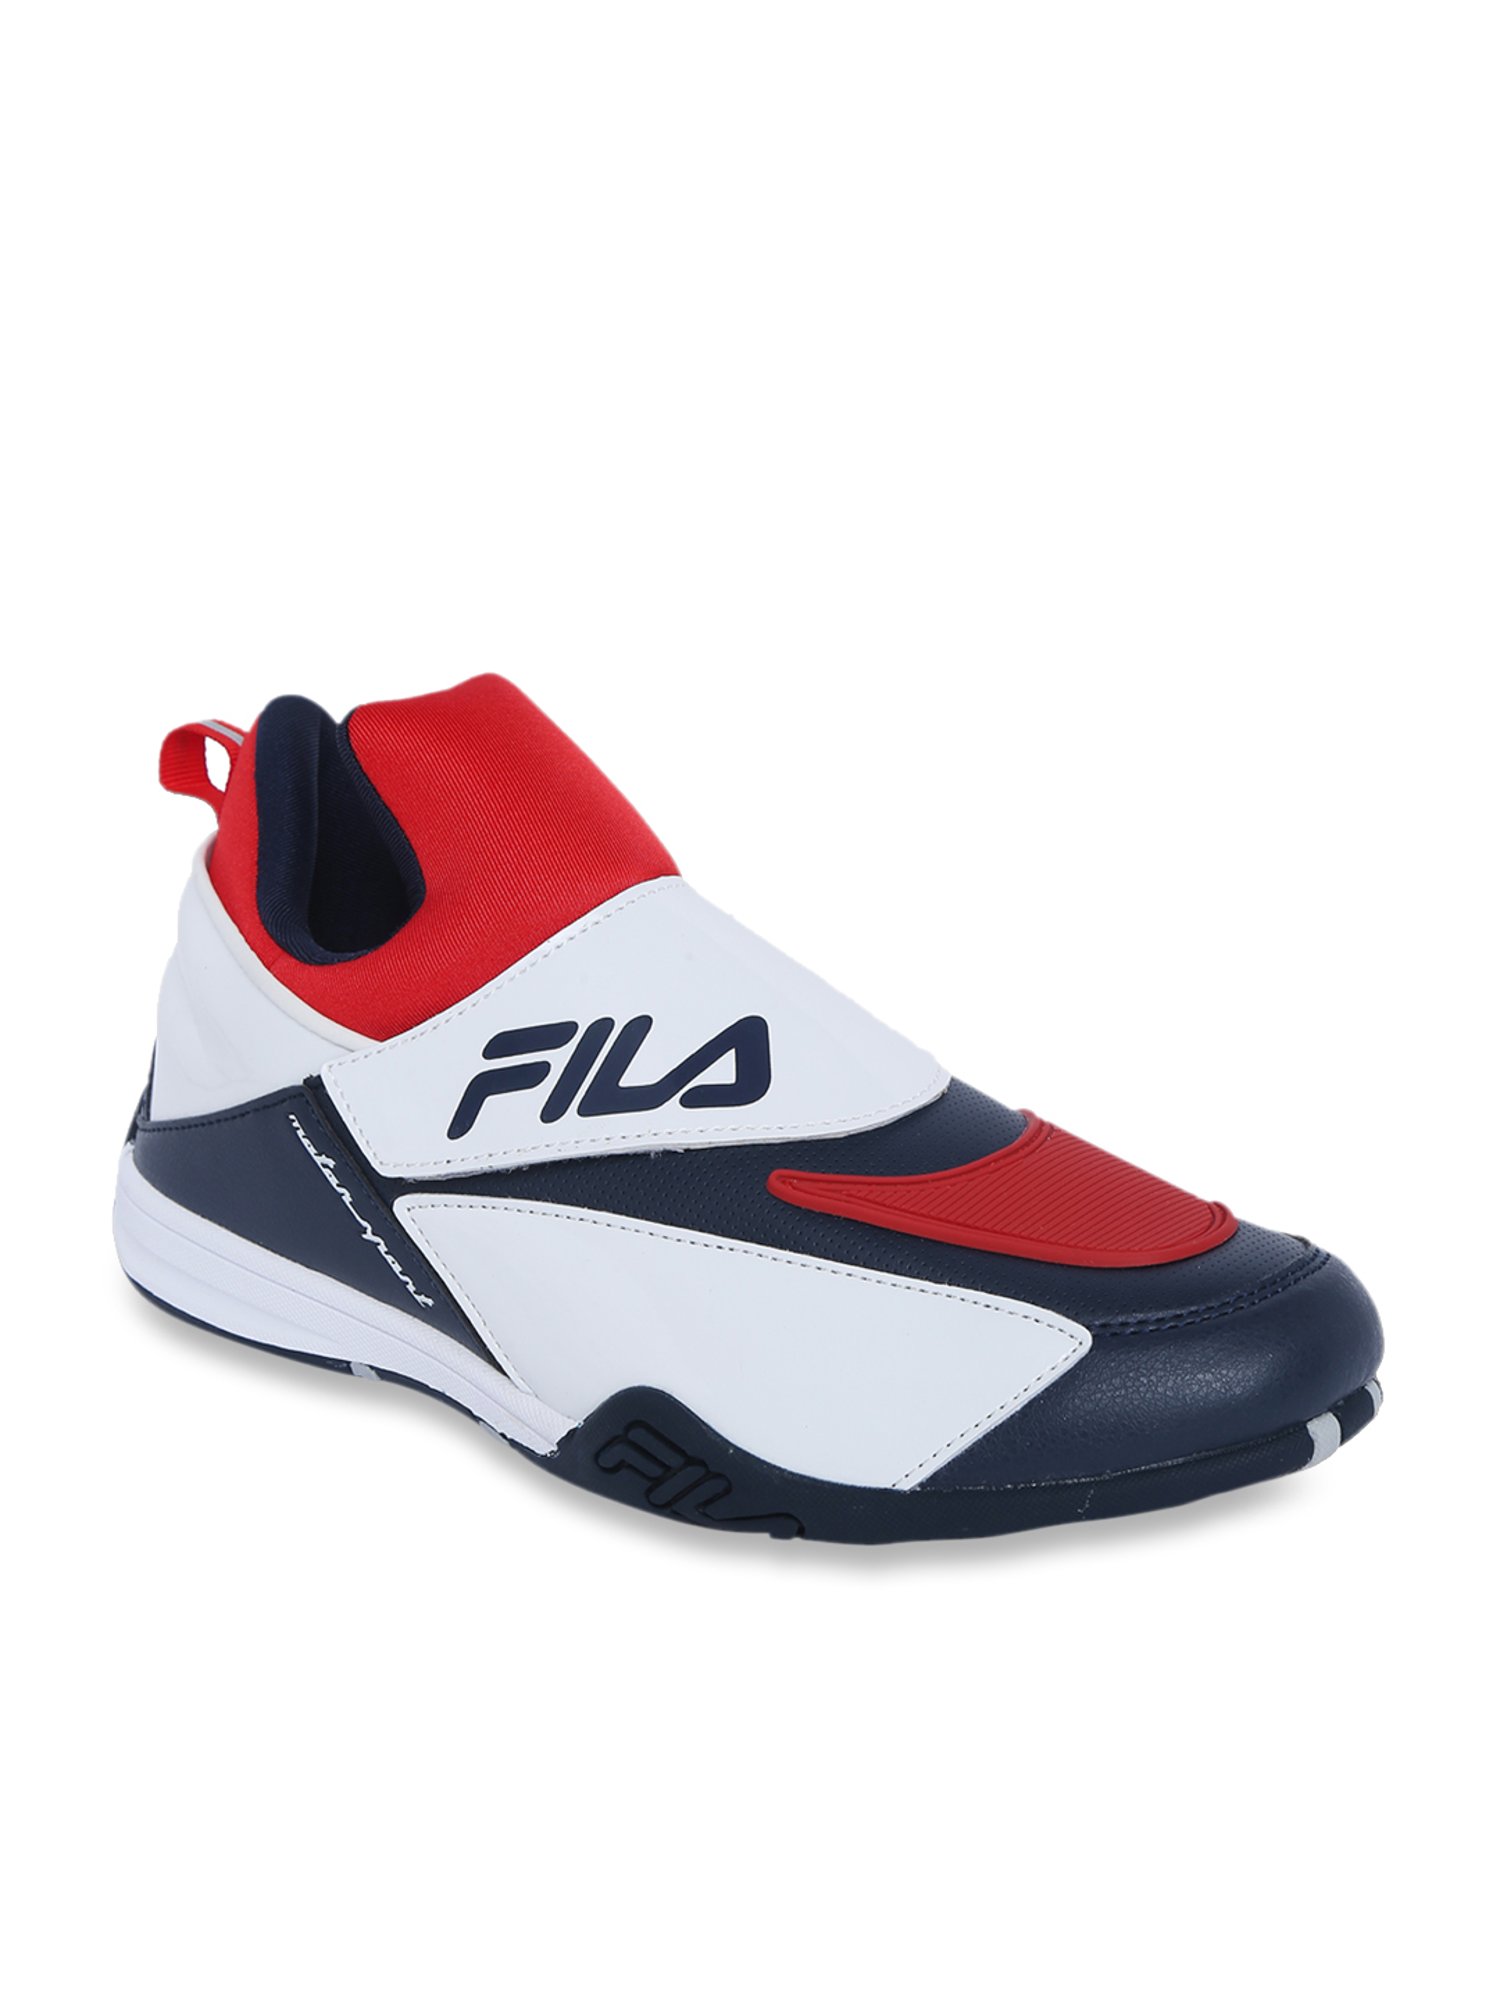 Fila Tailfin Mid White \u0026 Red Sneakers 